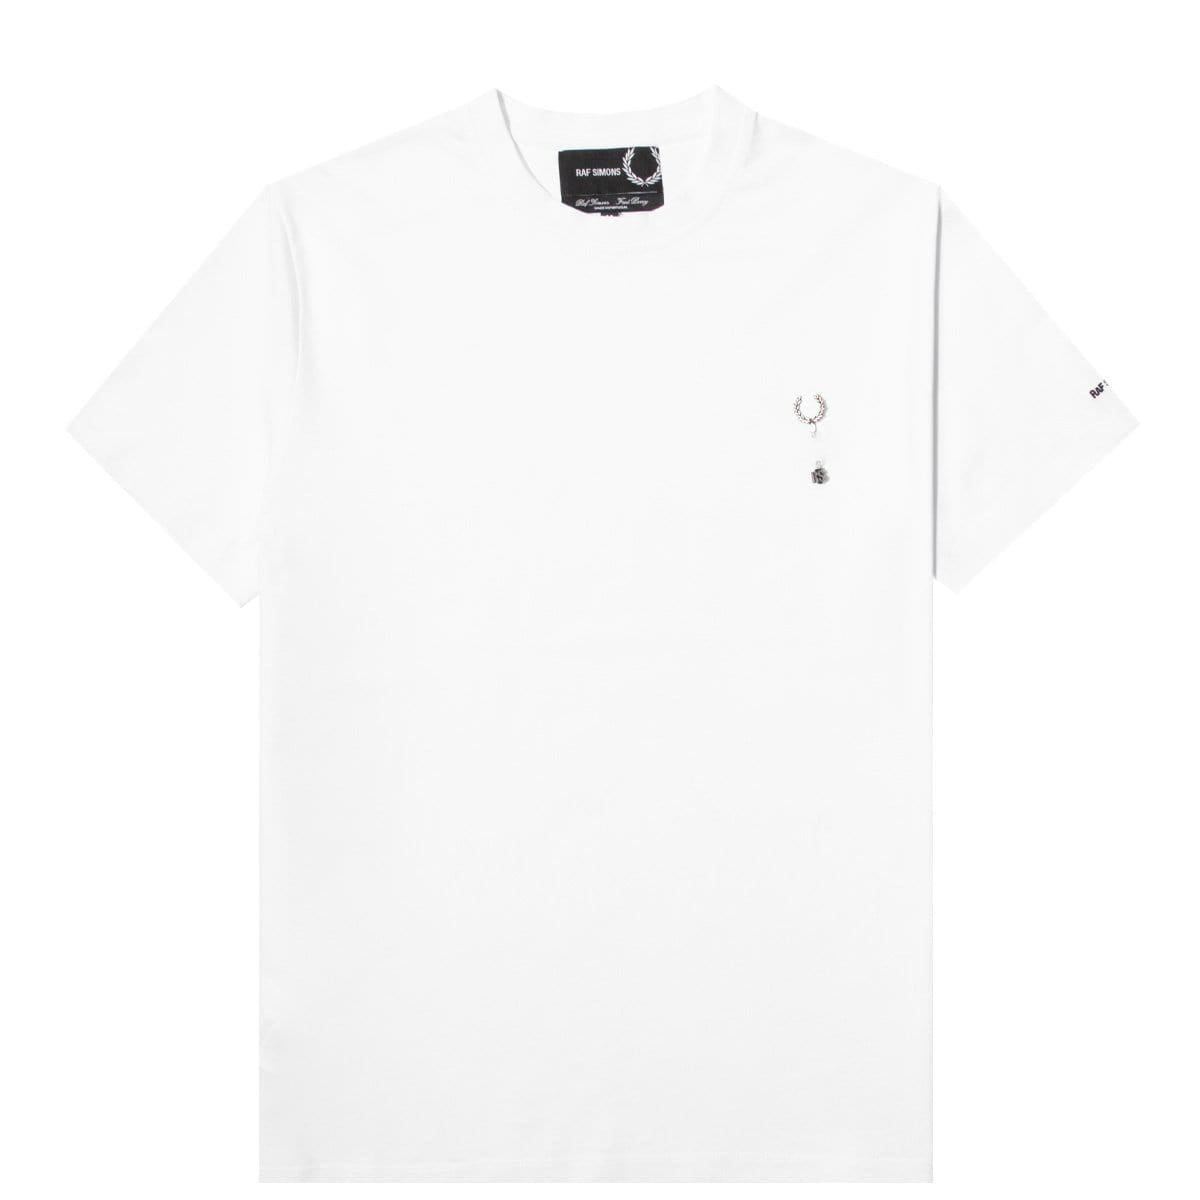 Fred Perry T-Shirts x Raf Simons LAUREL WREATH PIN T-SHIRT